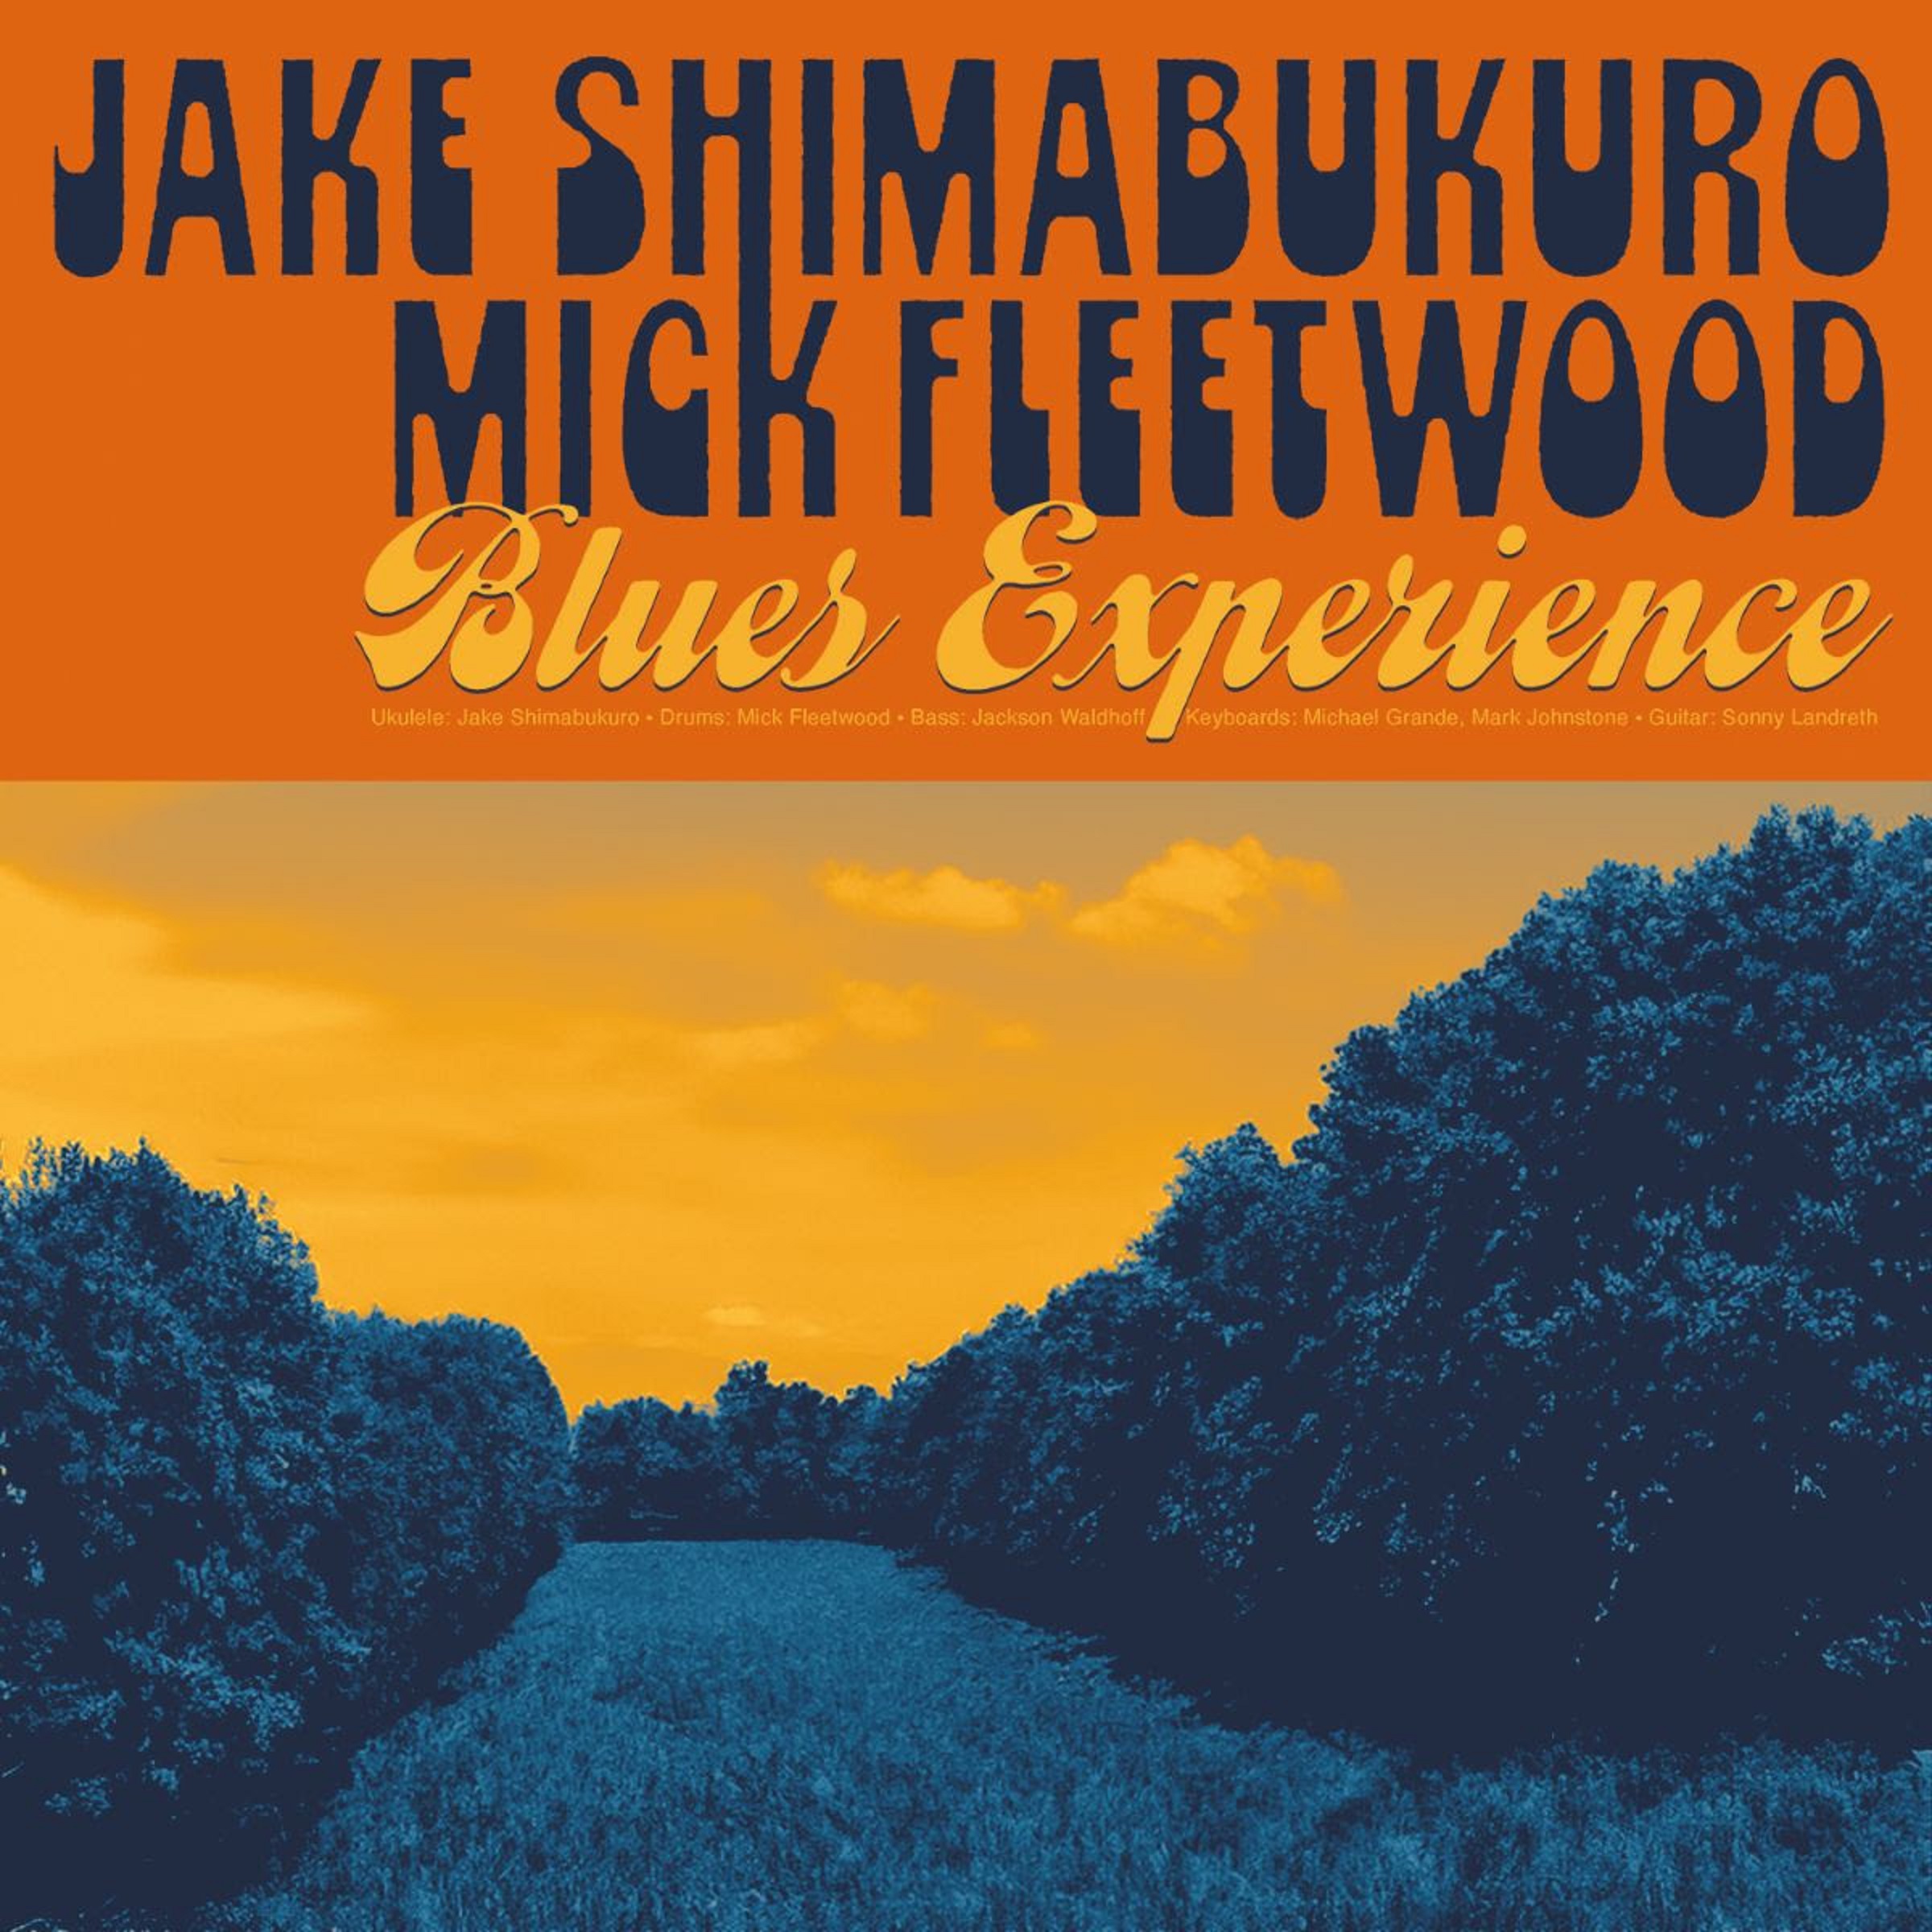 Mick Fleetwood & Jake Shimabukuro to Release 'Blues Experience'